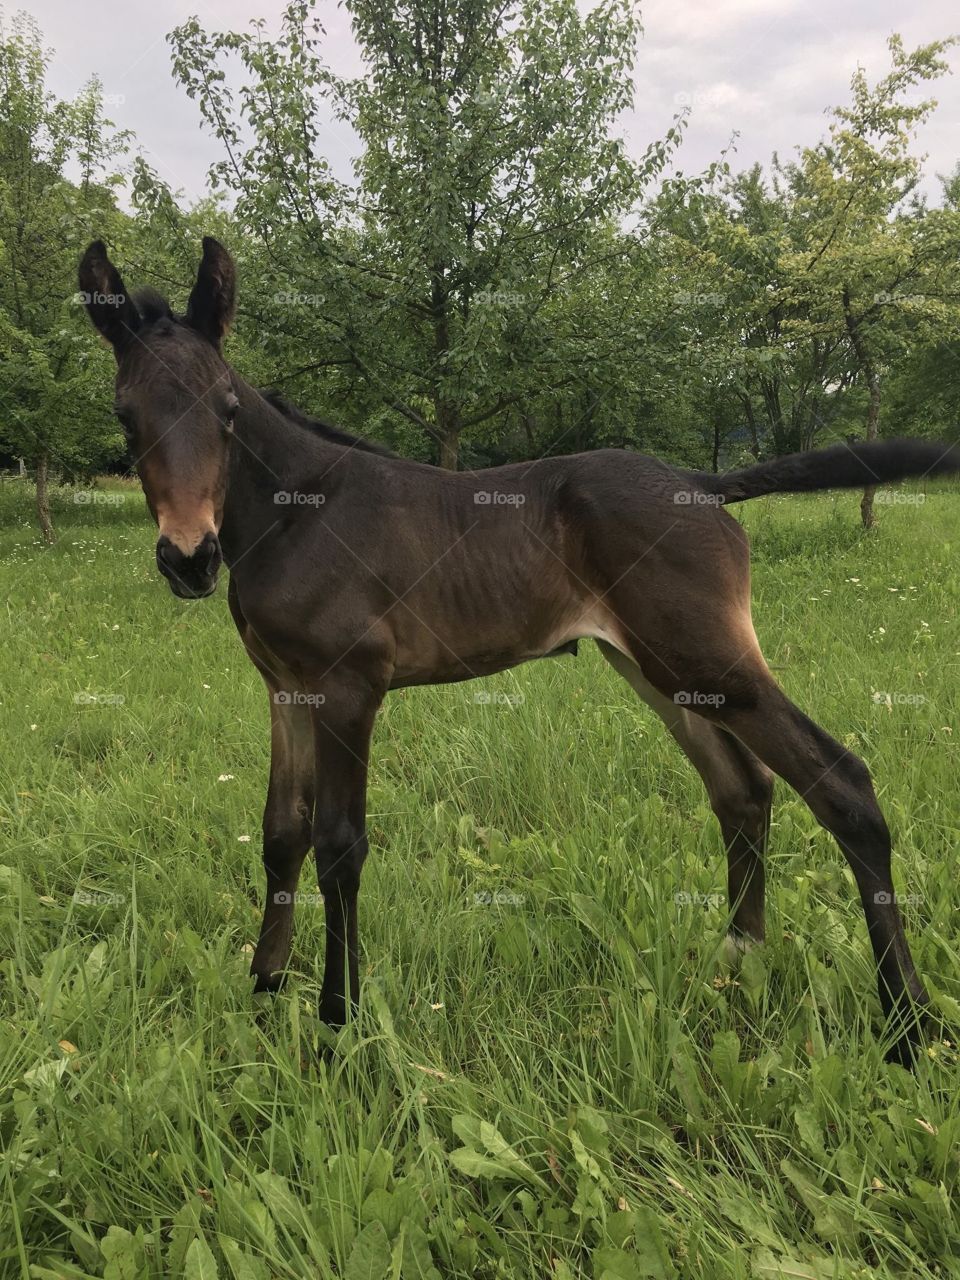 Two weeks old colt